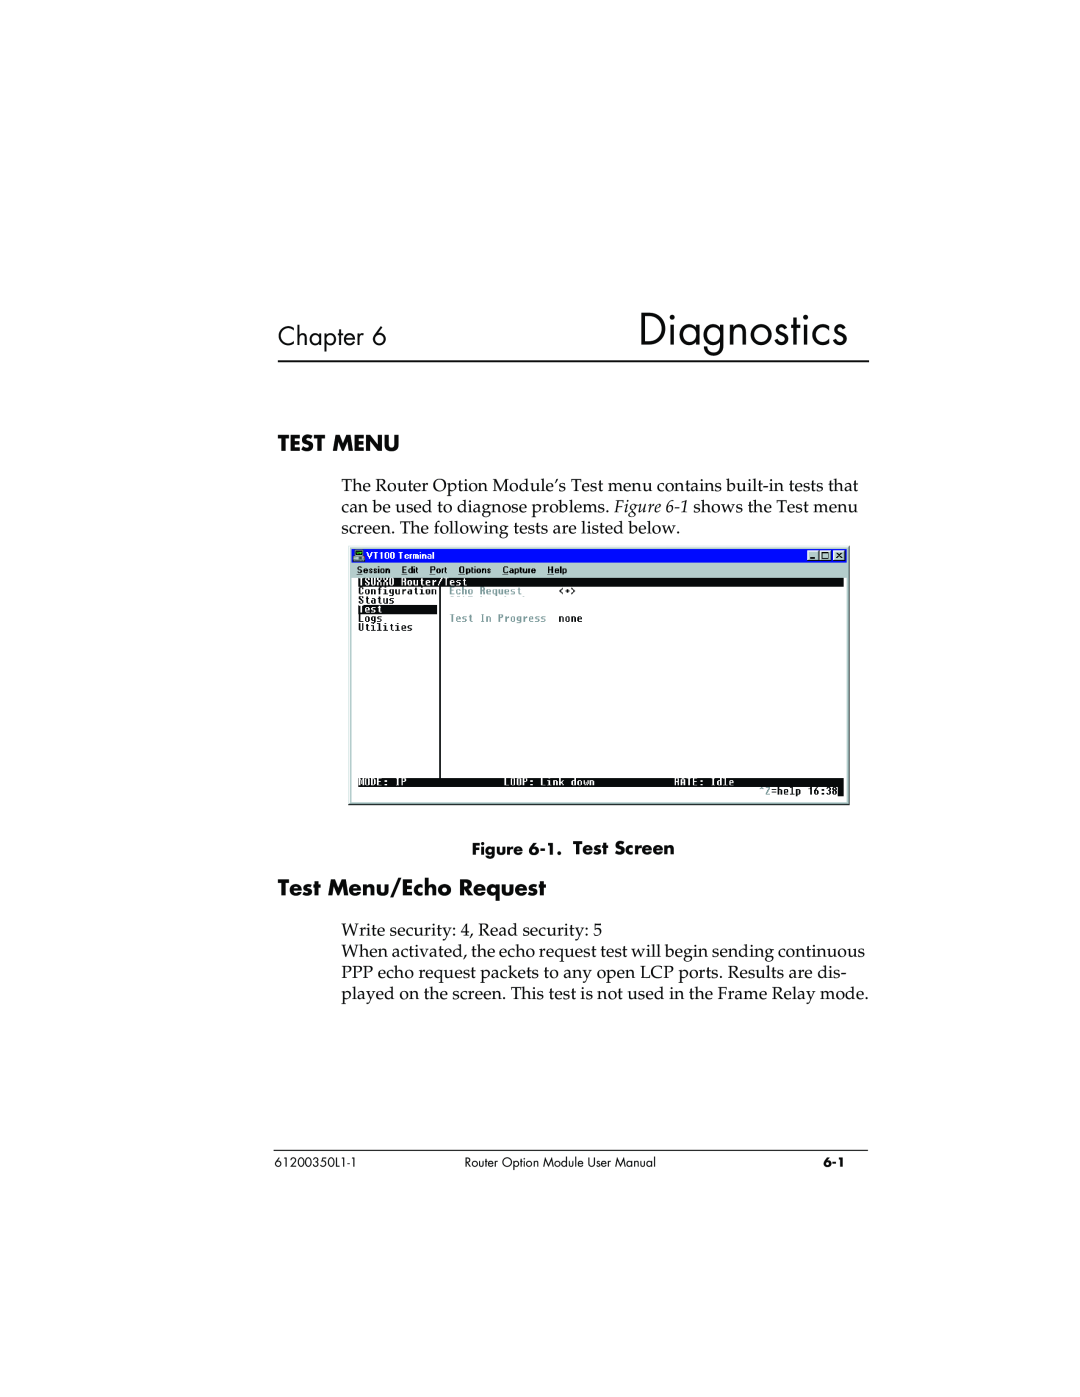 ADTRAN 1200350L1 user manual Diagnostics, Test Menu/Echo Request, Chapter 